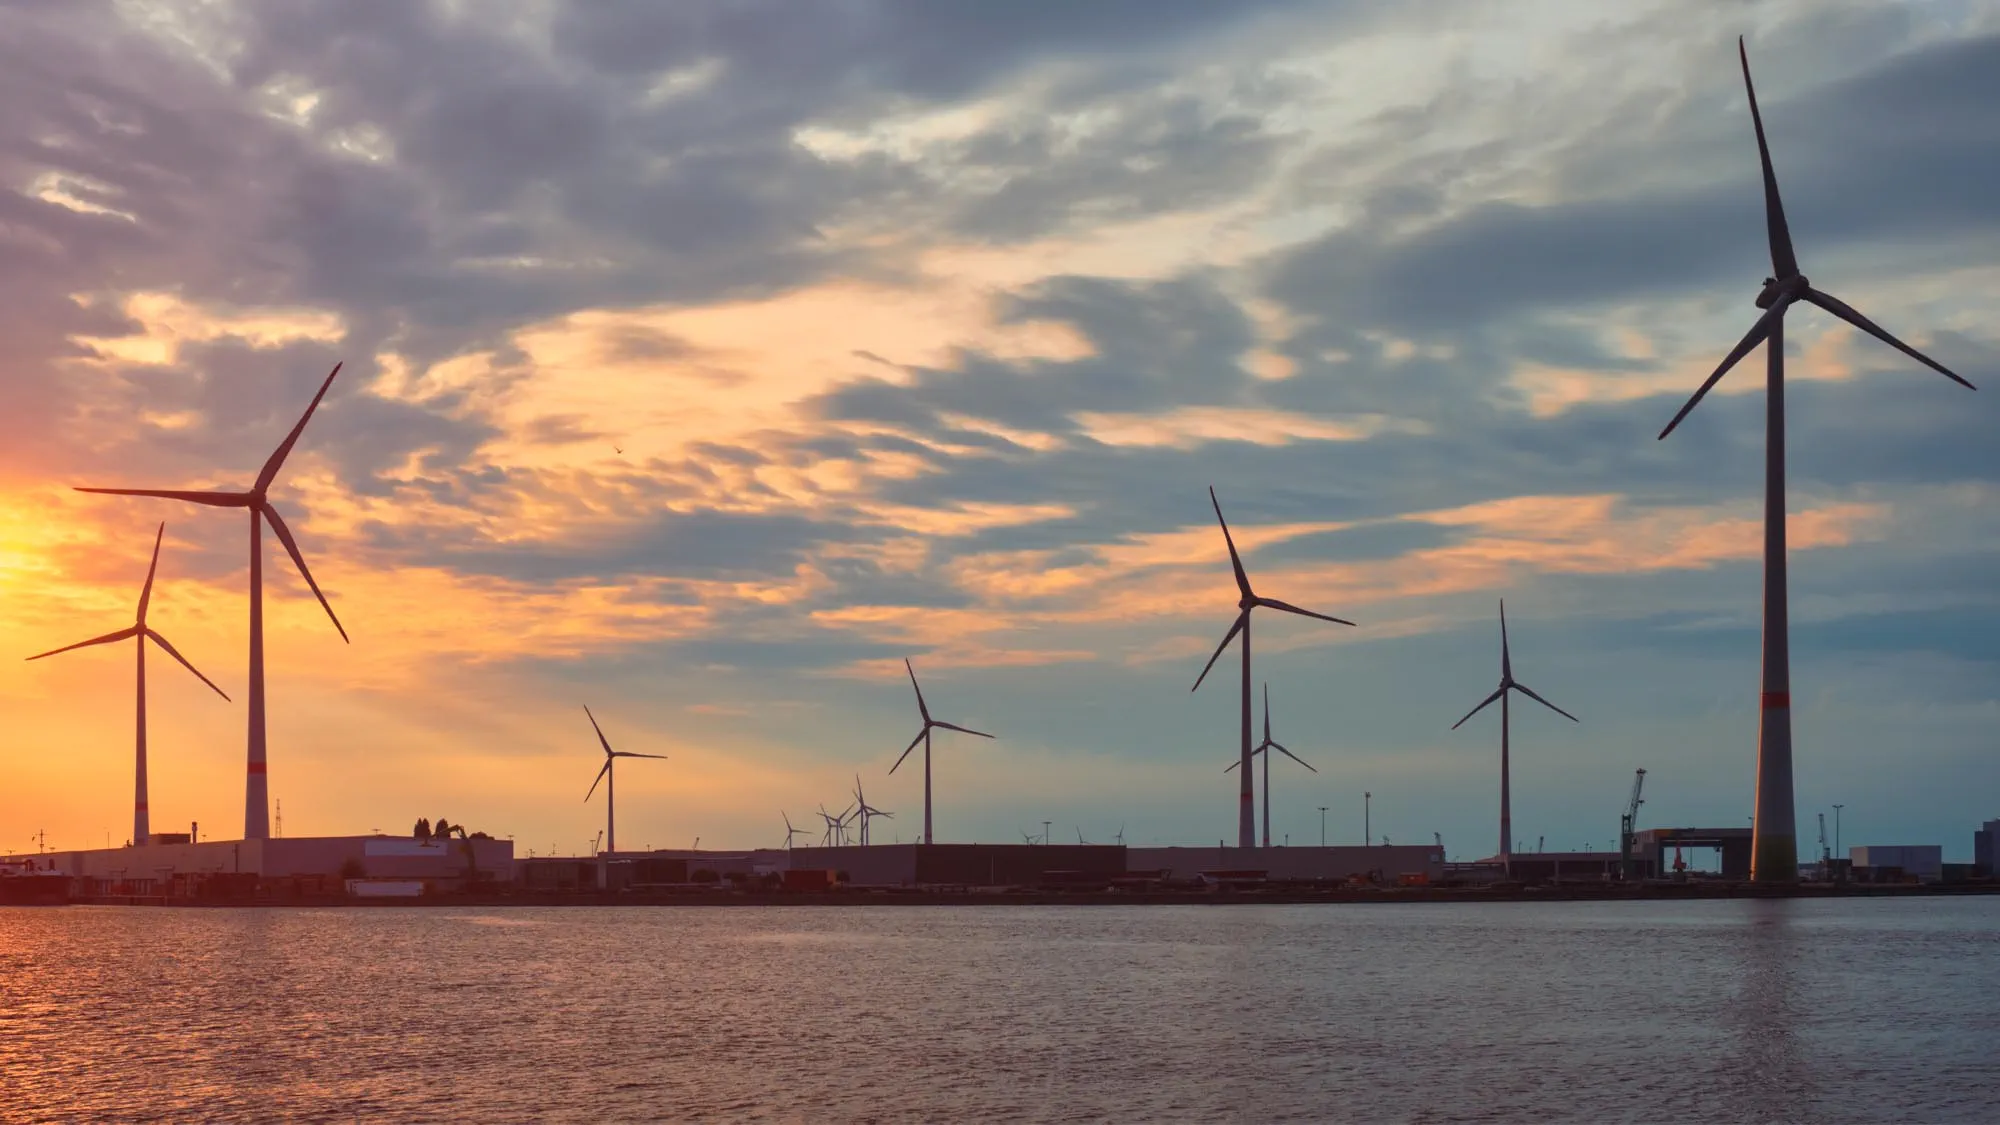 Wind turbines power electricity generators in Antwerp port on sunset. Credit: Shutterstock